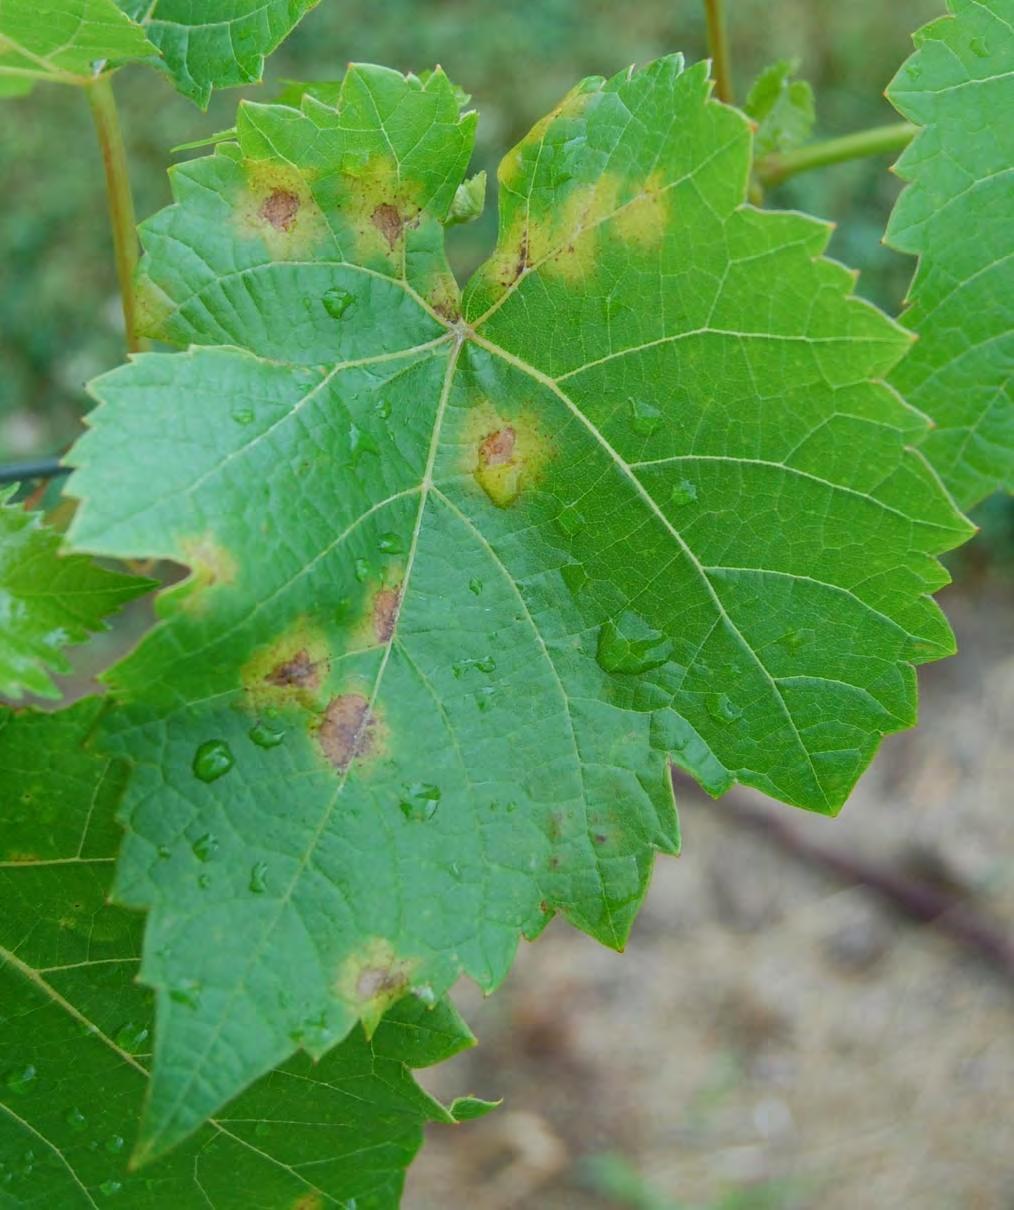 Downy Mildew (Plasmopara viticola)